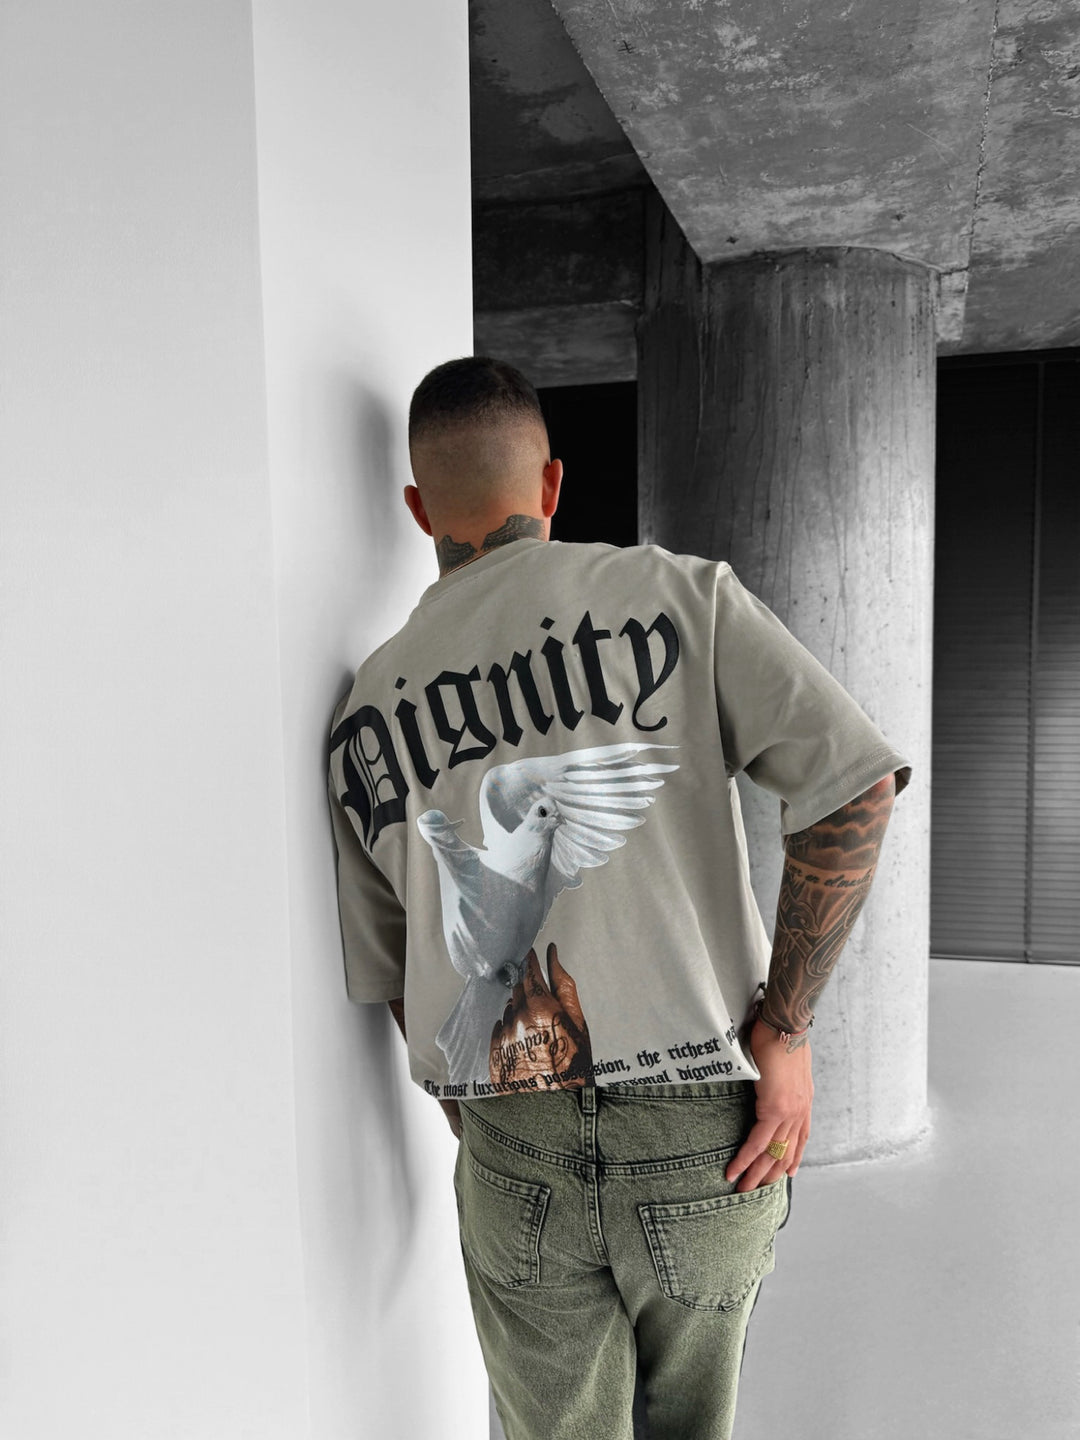 Oversize Dignity T-shirt - Stone